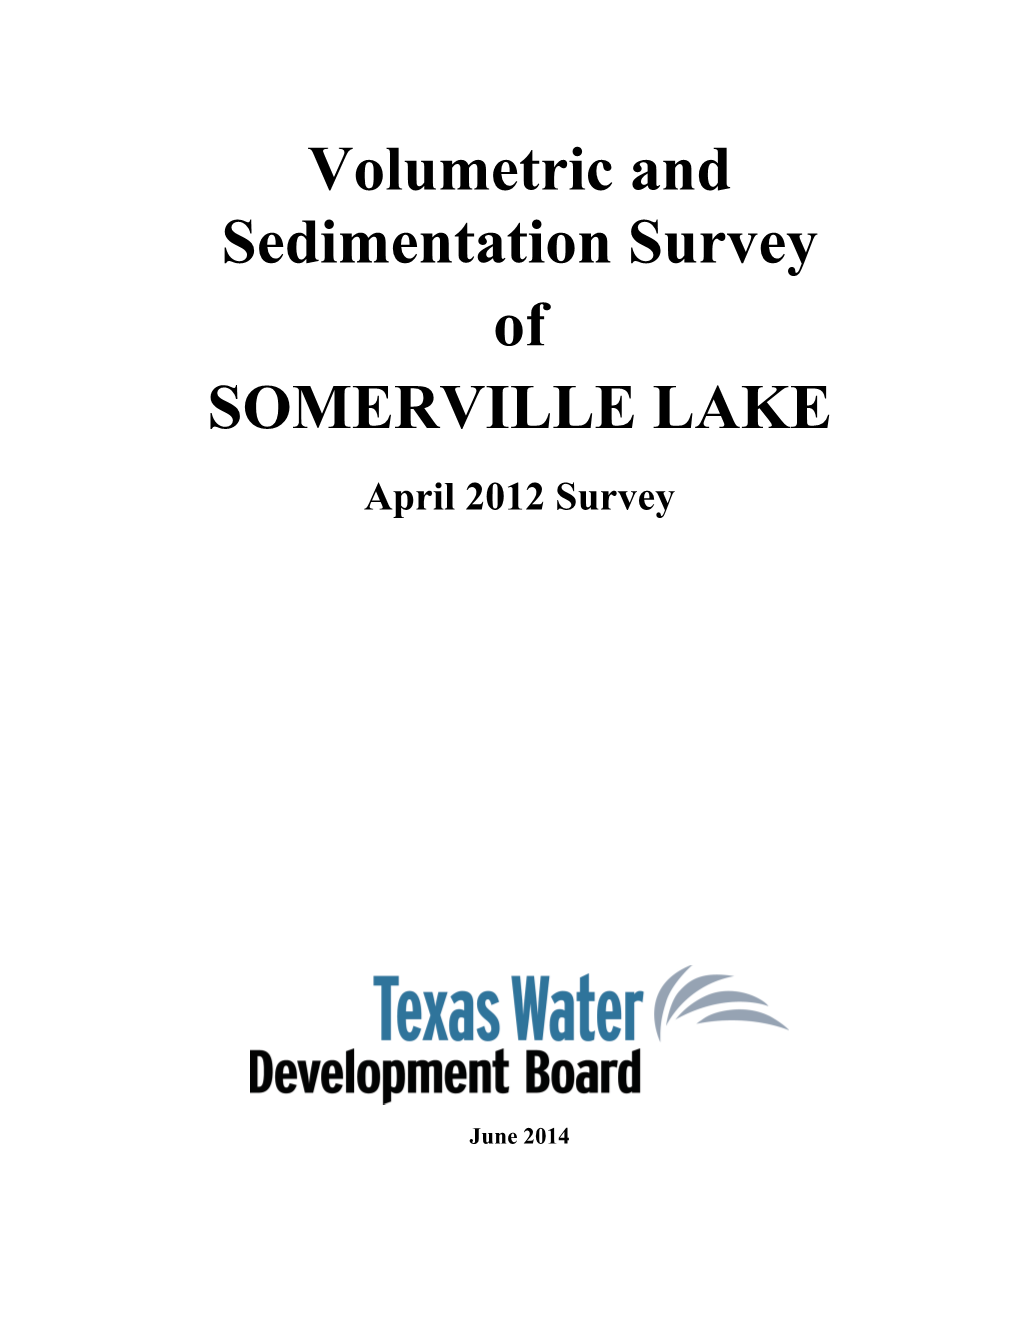 Volumetric and Sedimentation Survey of SOMERVILLE LAKE April 2012 Survey